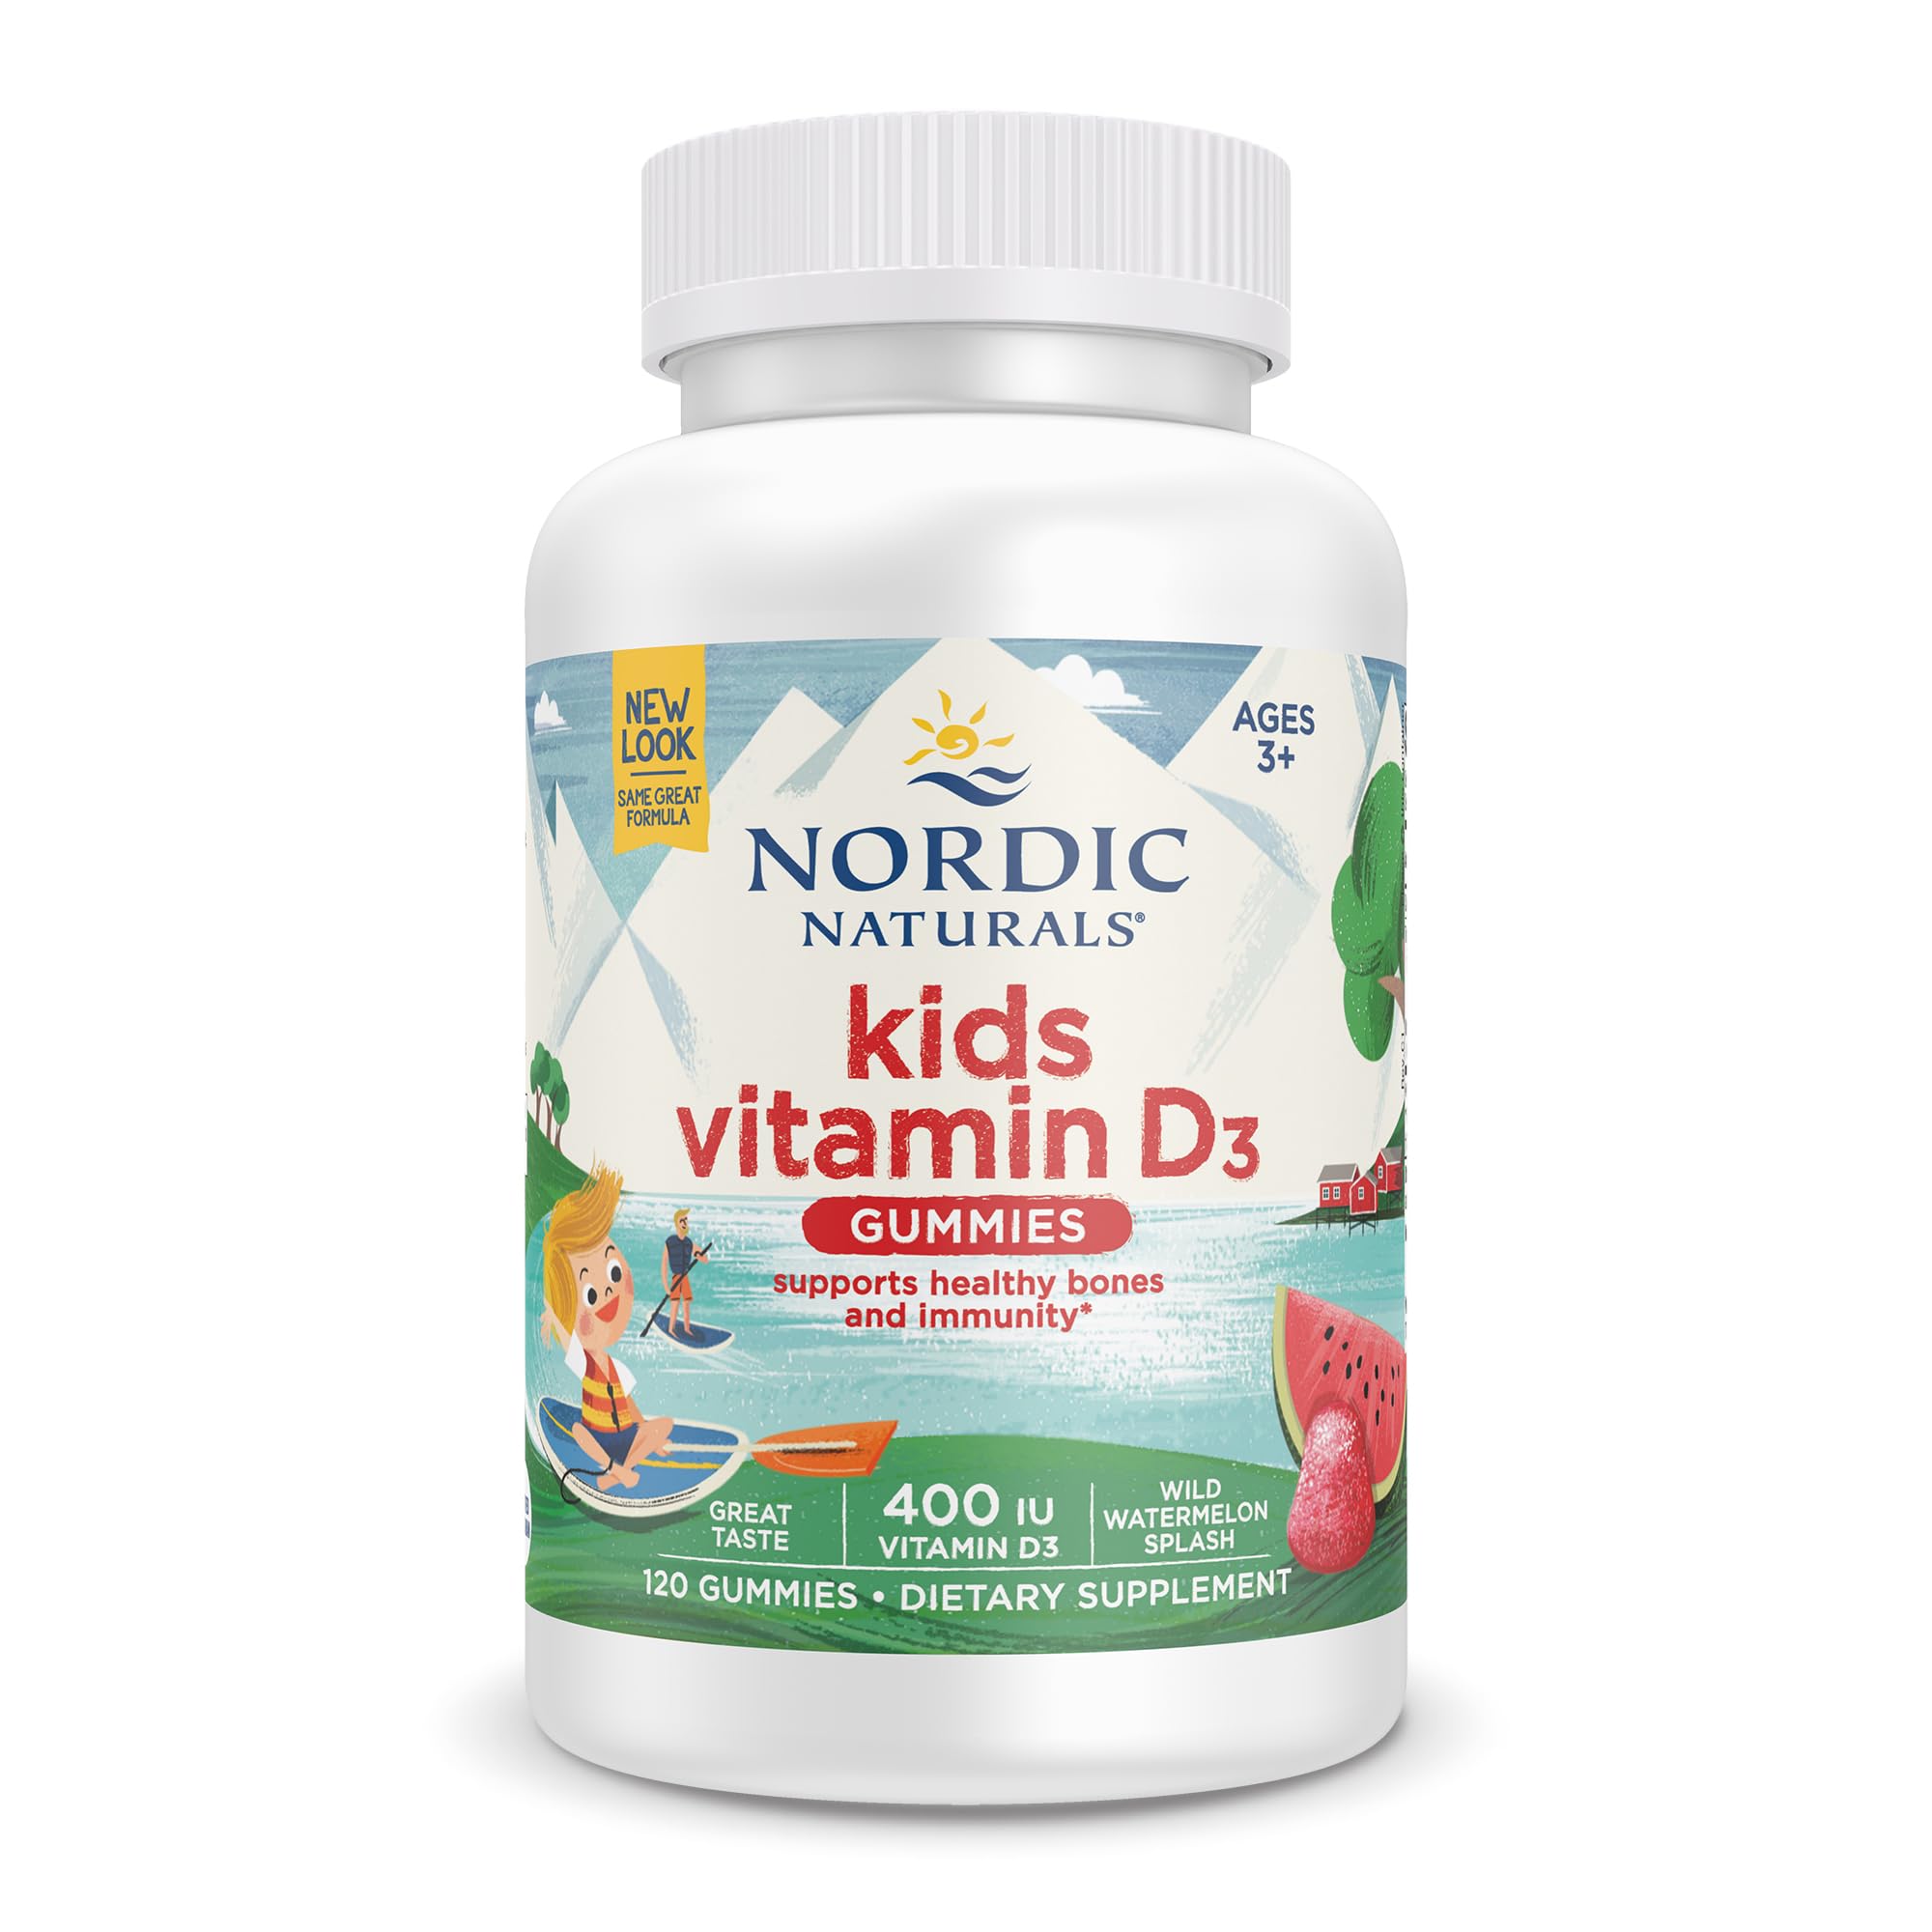 Nordic Naturals Vitamin D3 Gummies Kids, Wild Watermelon Splash - 120 Gummies - 400 IU Vitamin D3 - Bone Health, Healthy Immunity - Non-GMO, Vegetarian - 120 Servings